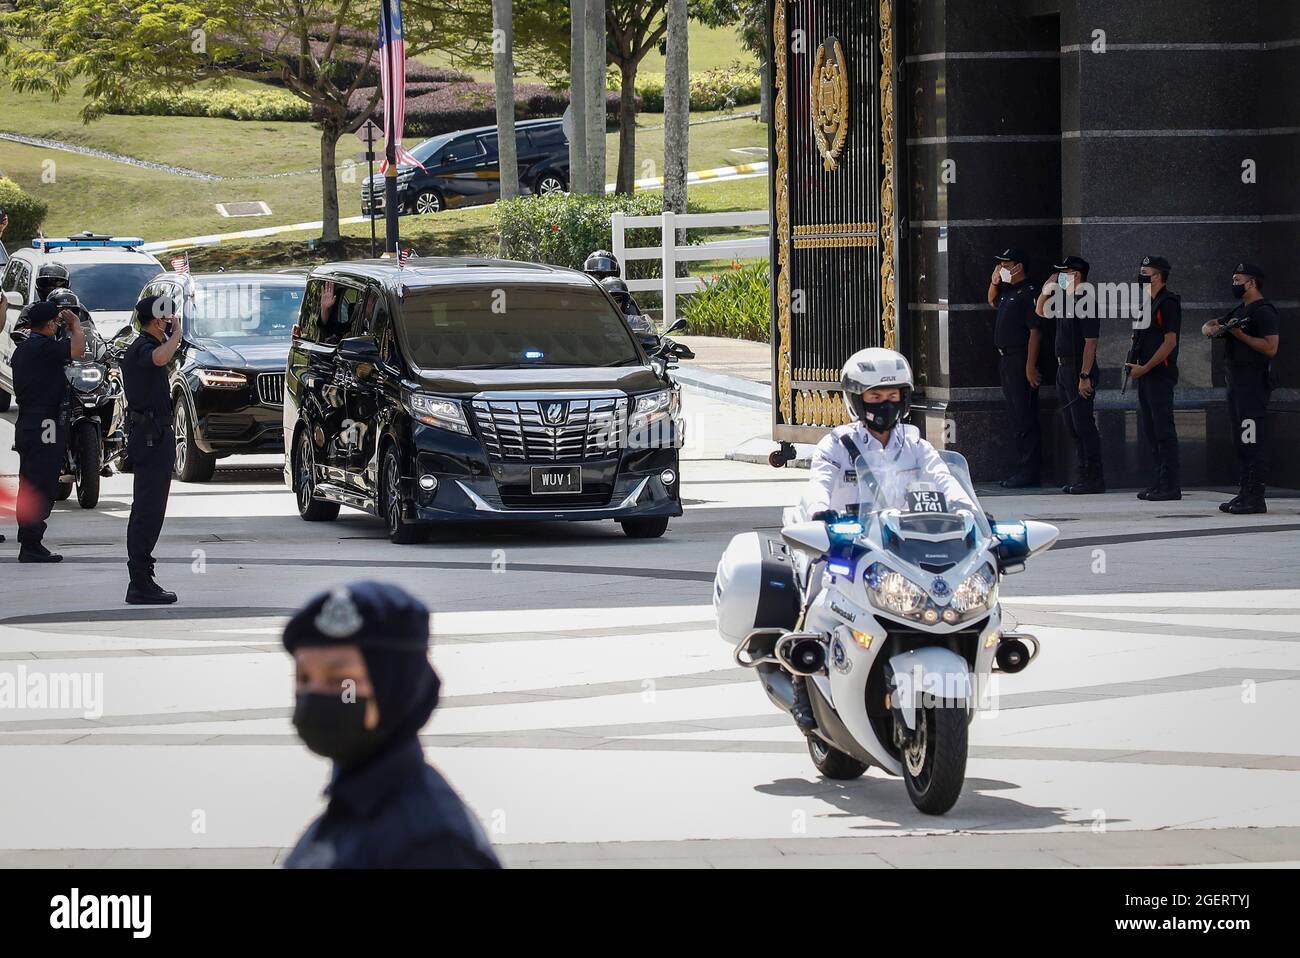 Malaysian Prime Minister, Ismail Sabri Yaakob motorcade leaves the